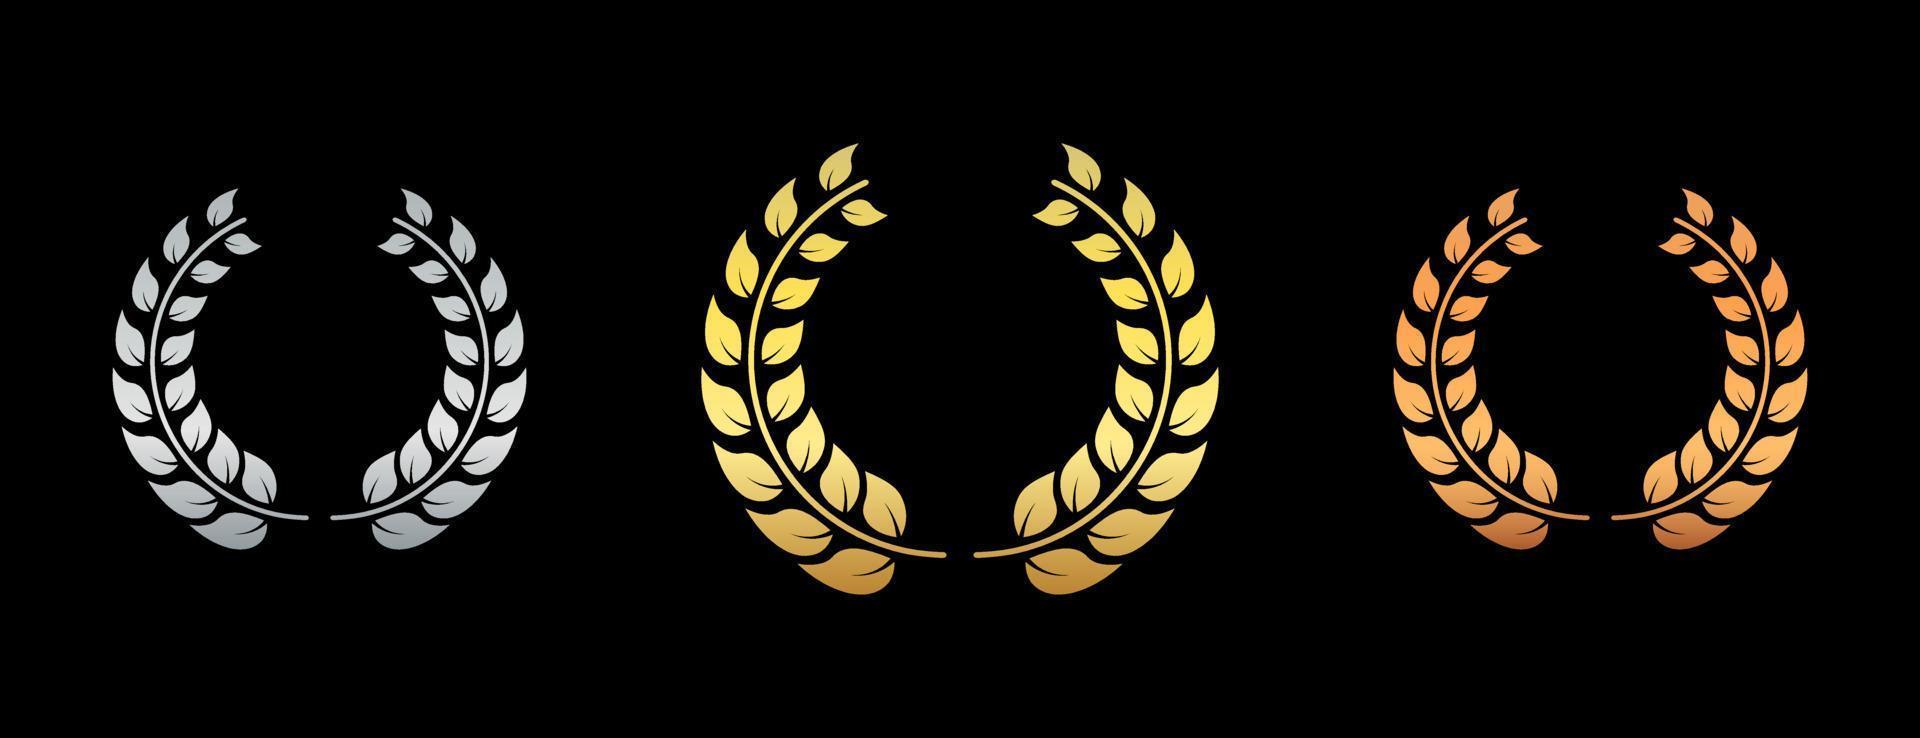 Chaplet Laurel Wreath Success Heraldry Silhouette Icon Set. Nominate Gold Bronze Silver Twig Leaf Olive Branch Reward Pictogram. Victory Achievement Emblem for Champion. Isolated Vector Illustration.